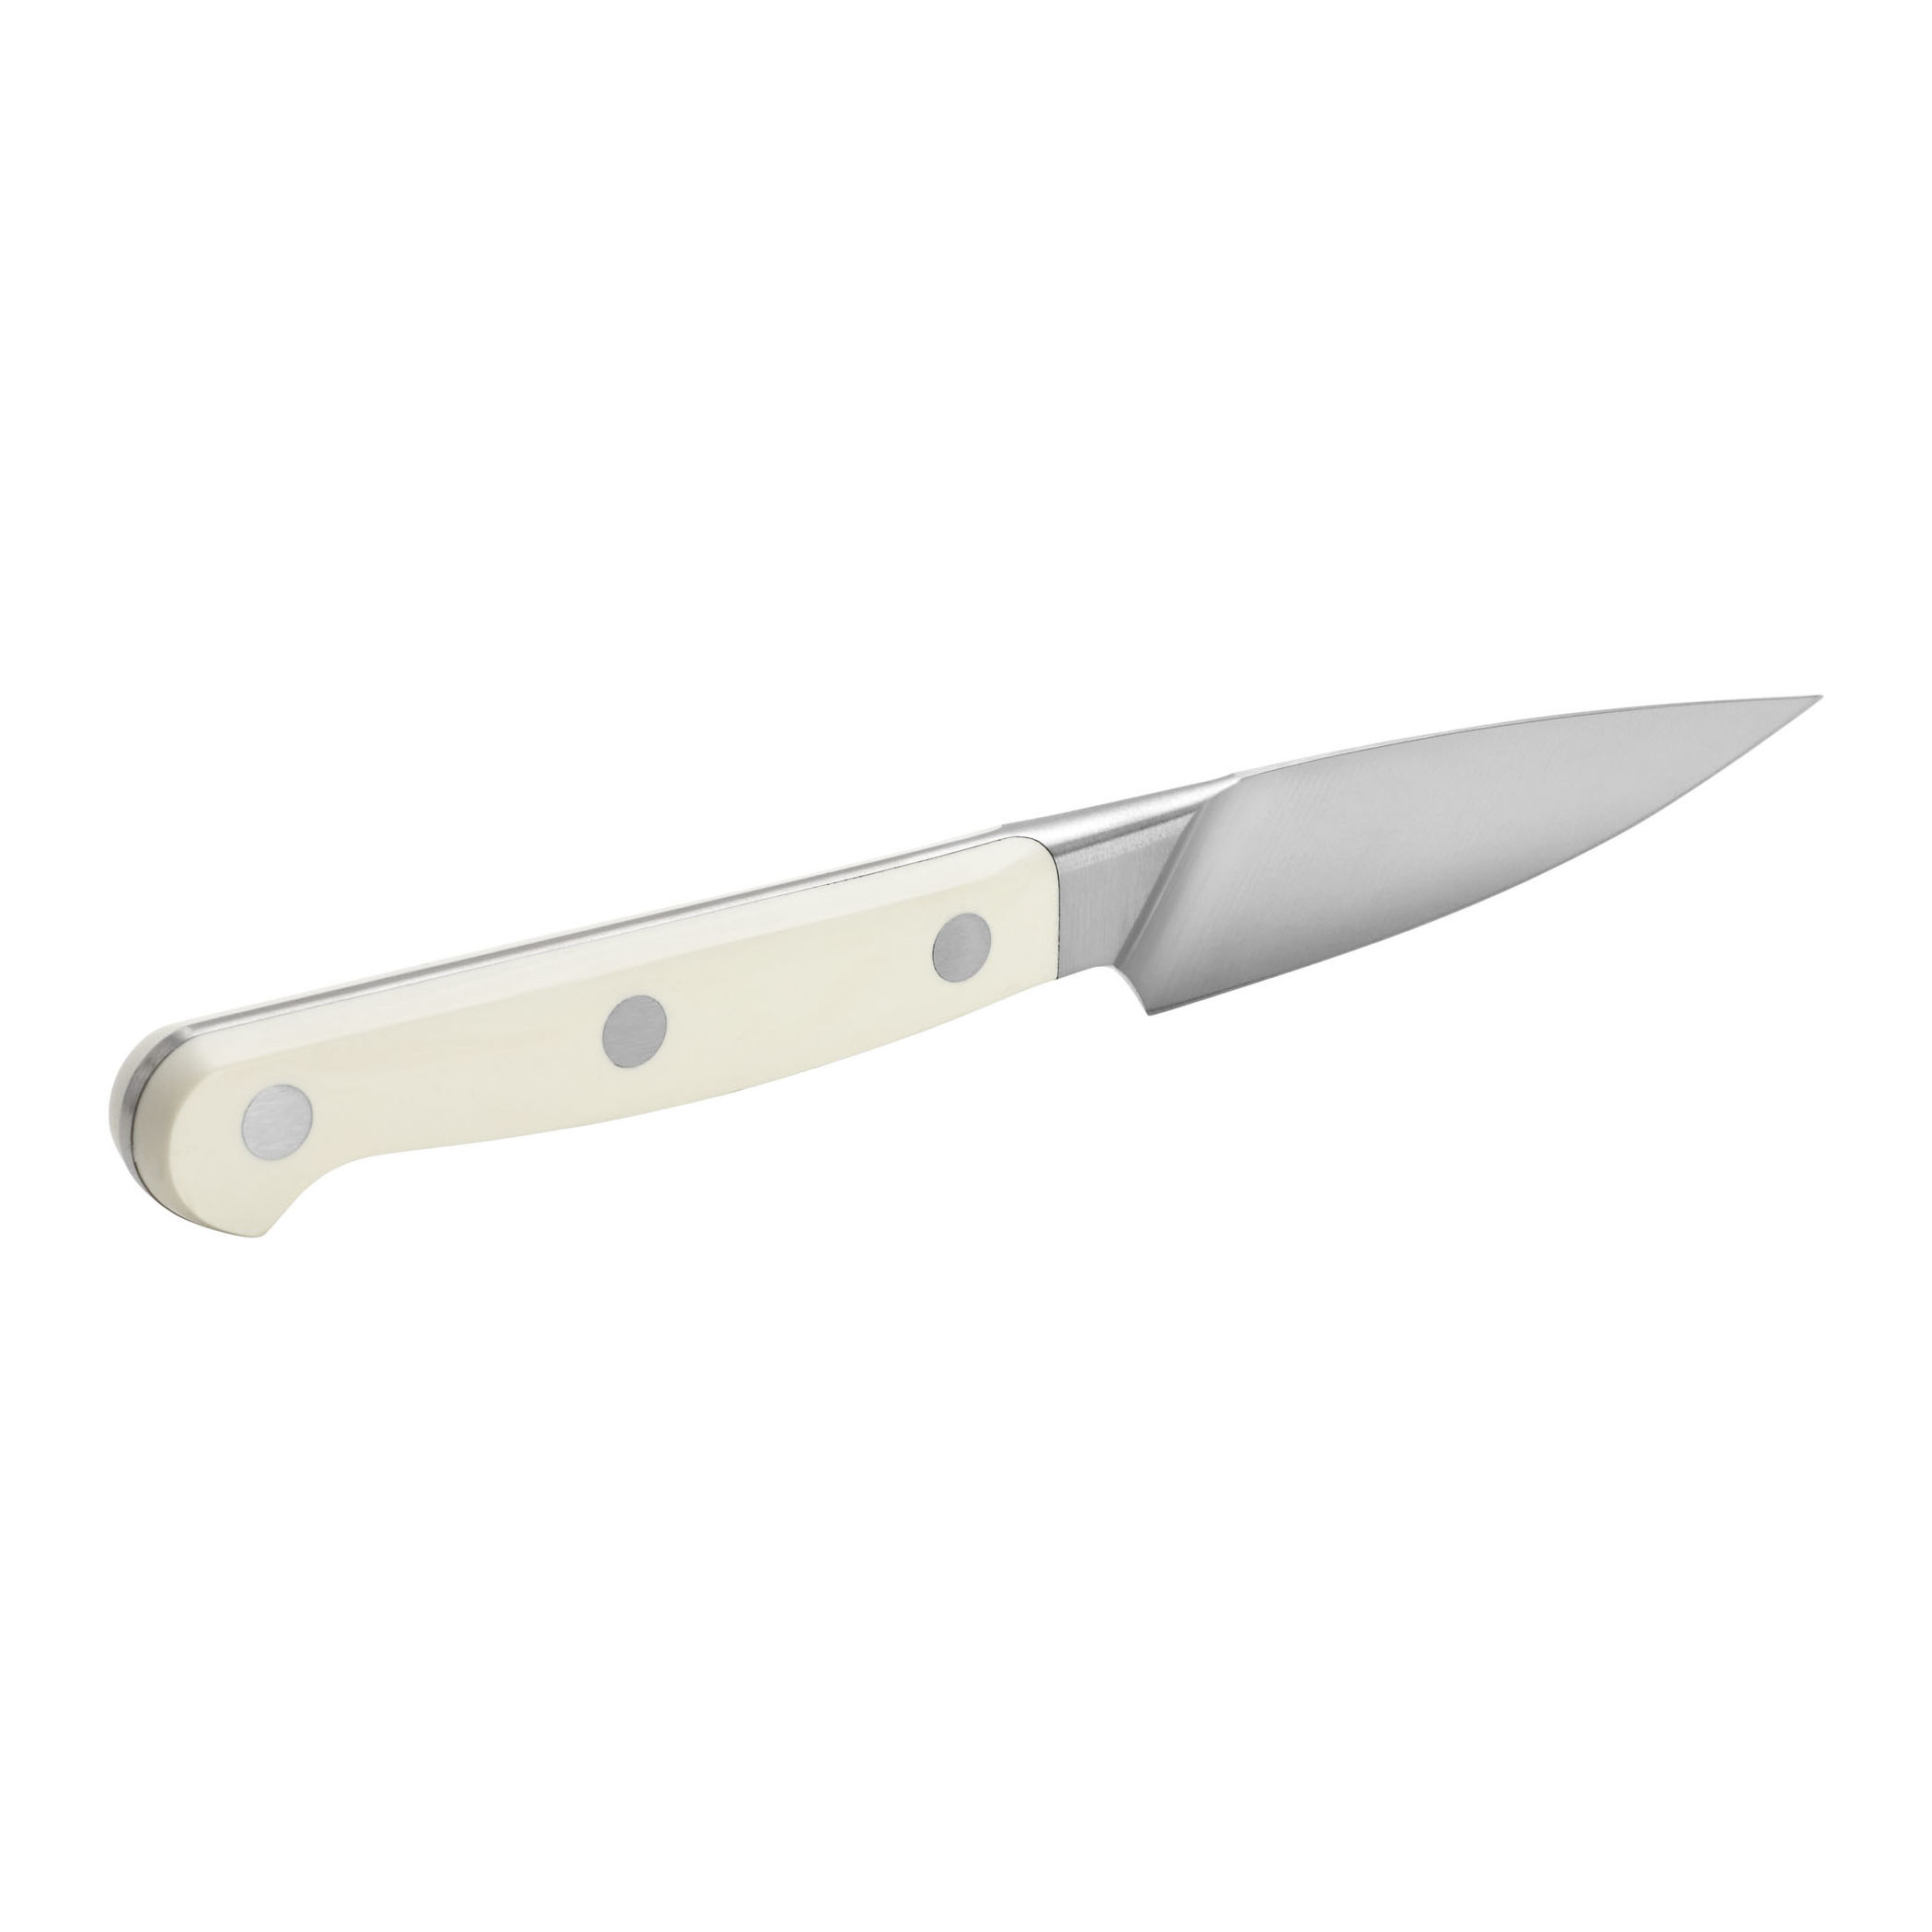 Zwilling J.A. Henckels Pro 4 Paring Knife - KnifeCenter - 38400-103